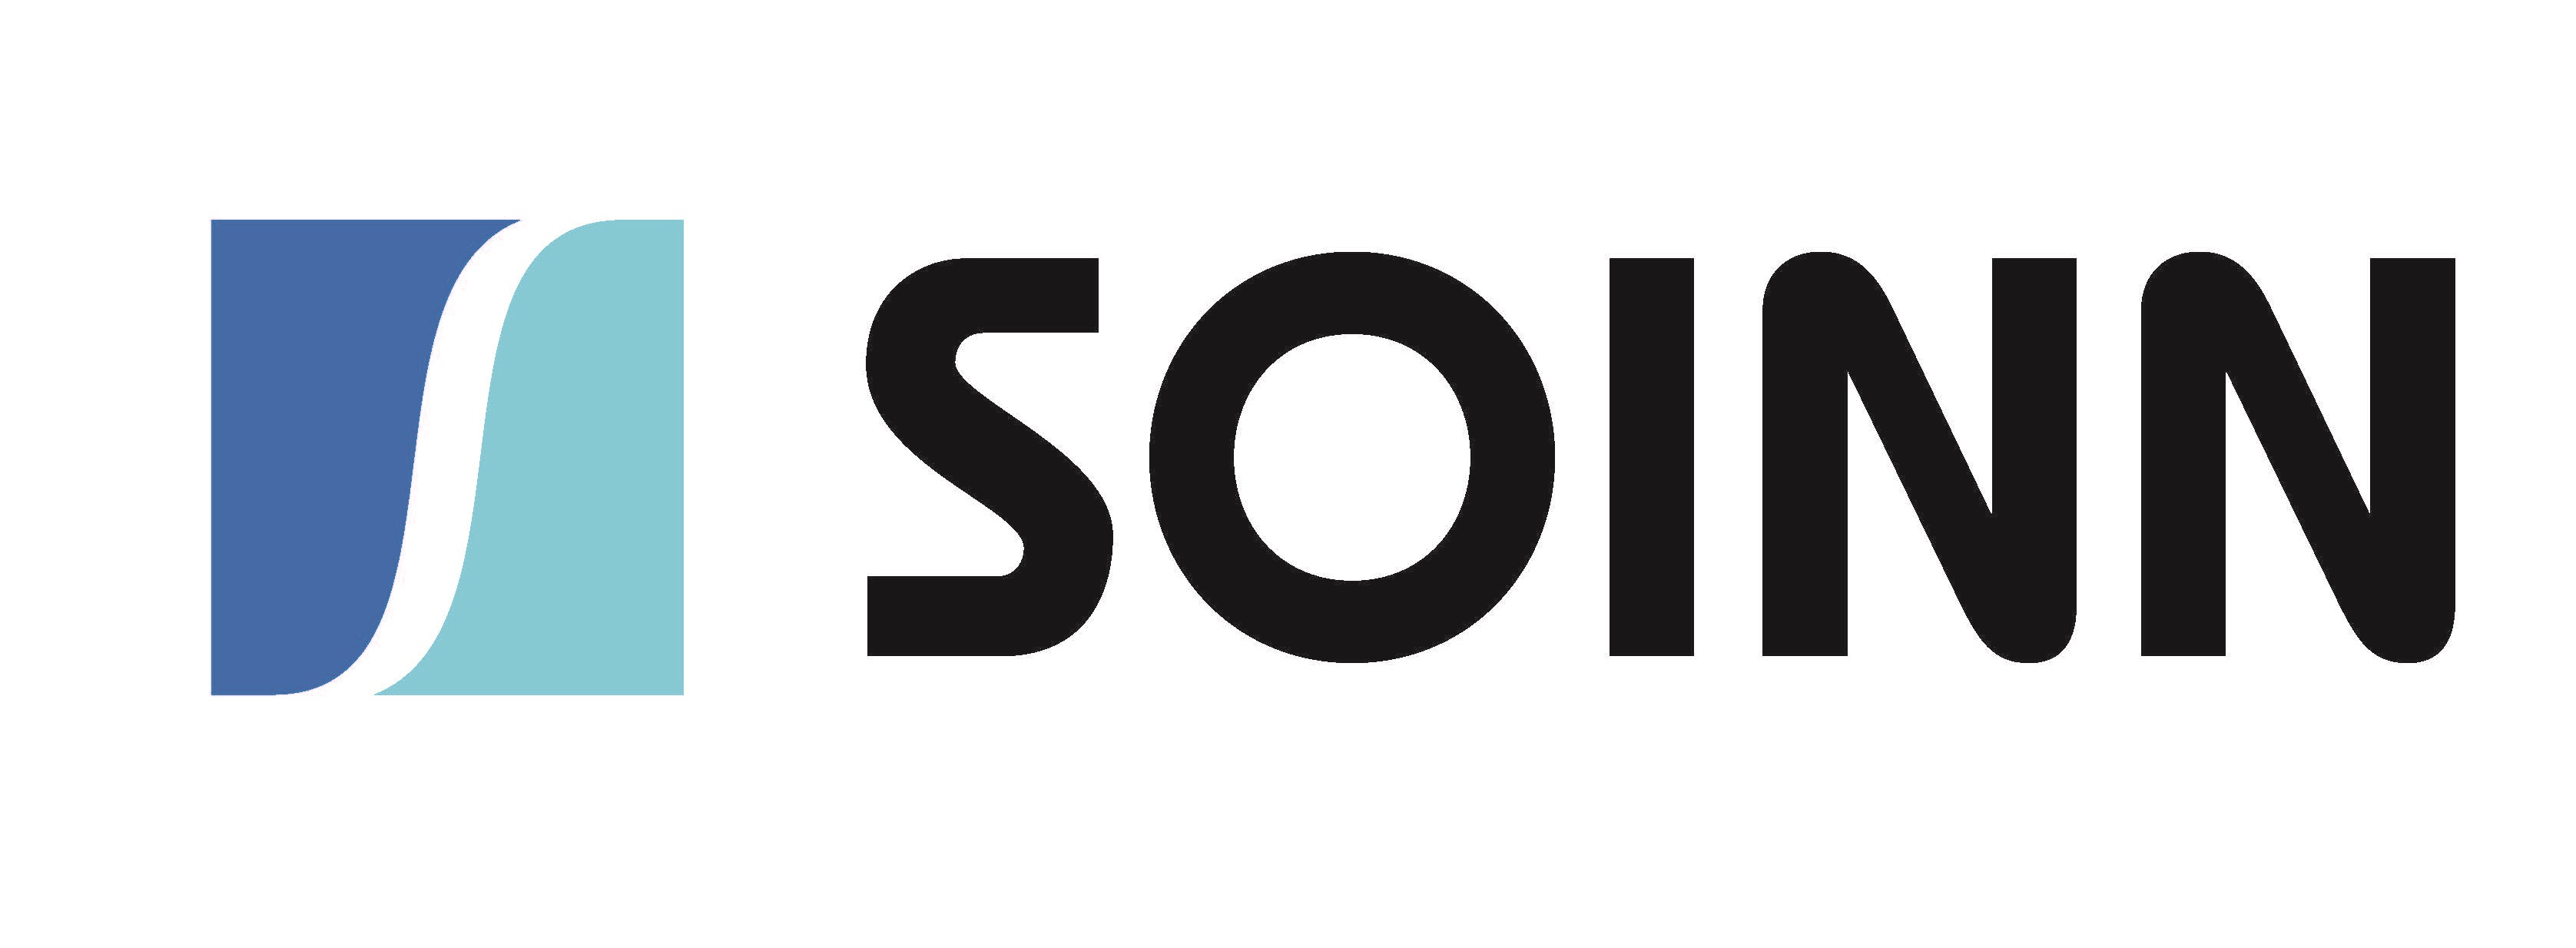 SOINN株式会社